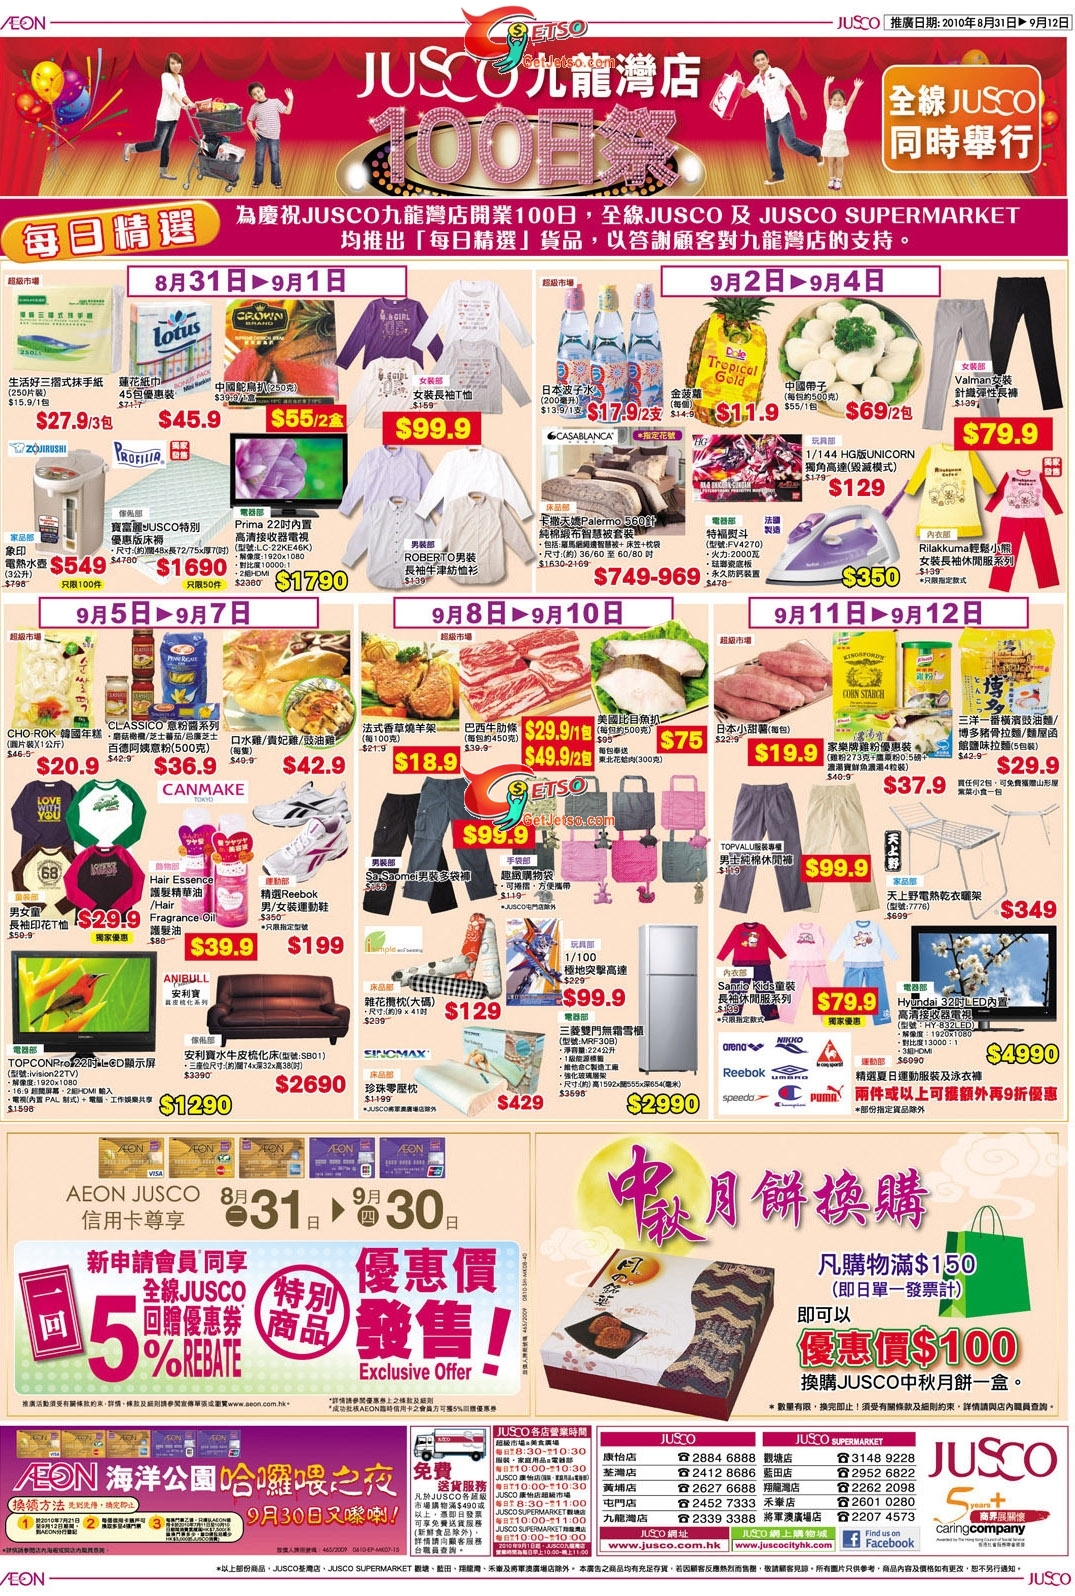 JUSCO 九龍灣店精選貨品特價發售及中秋月餅換購優惠(至10年9月12日)圖片1